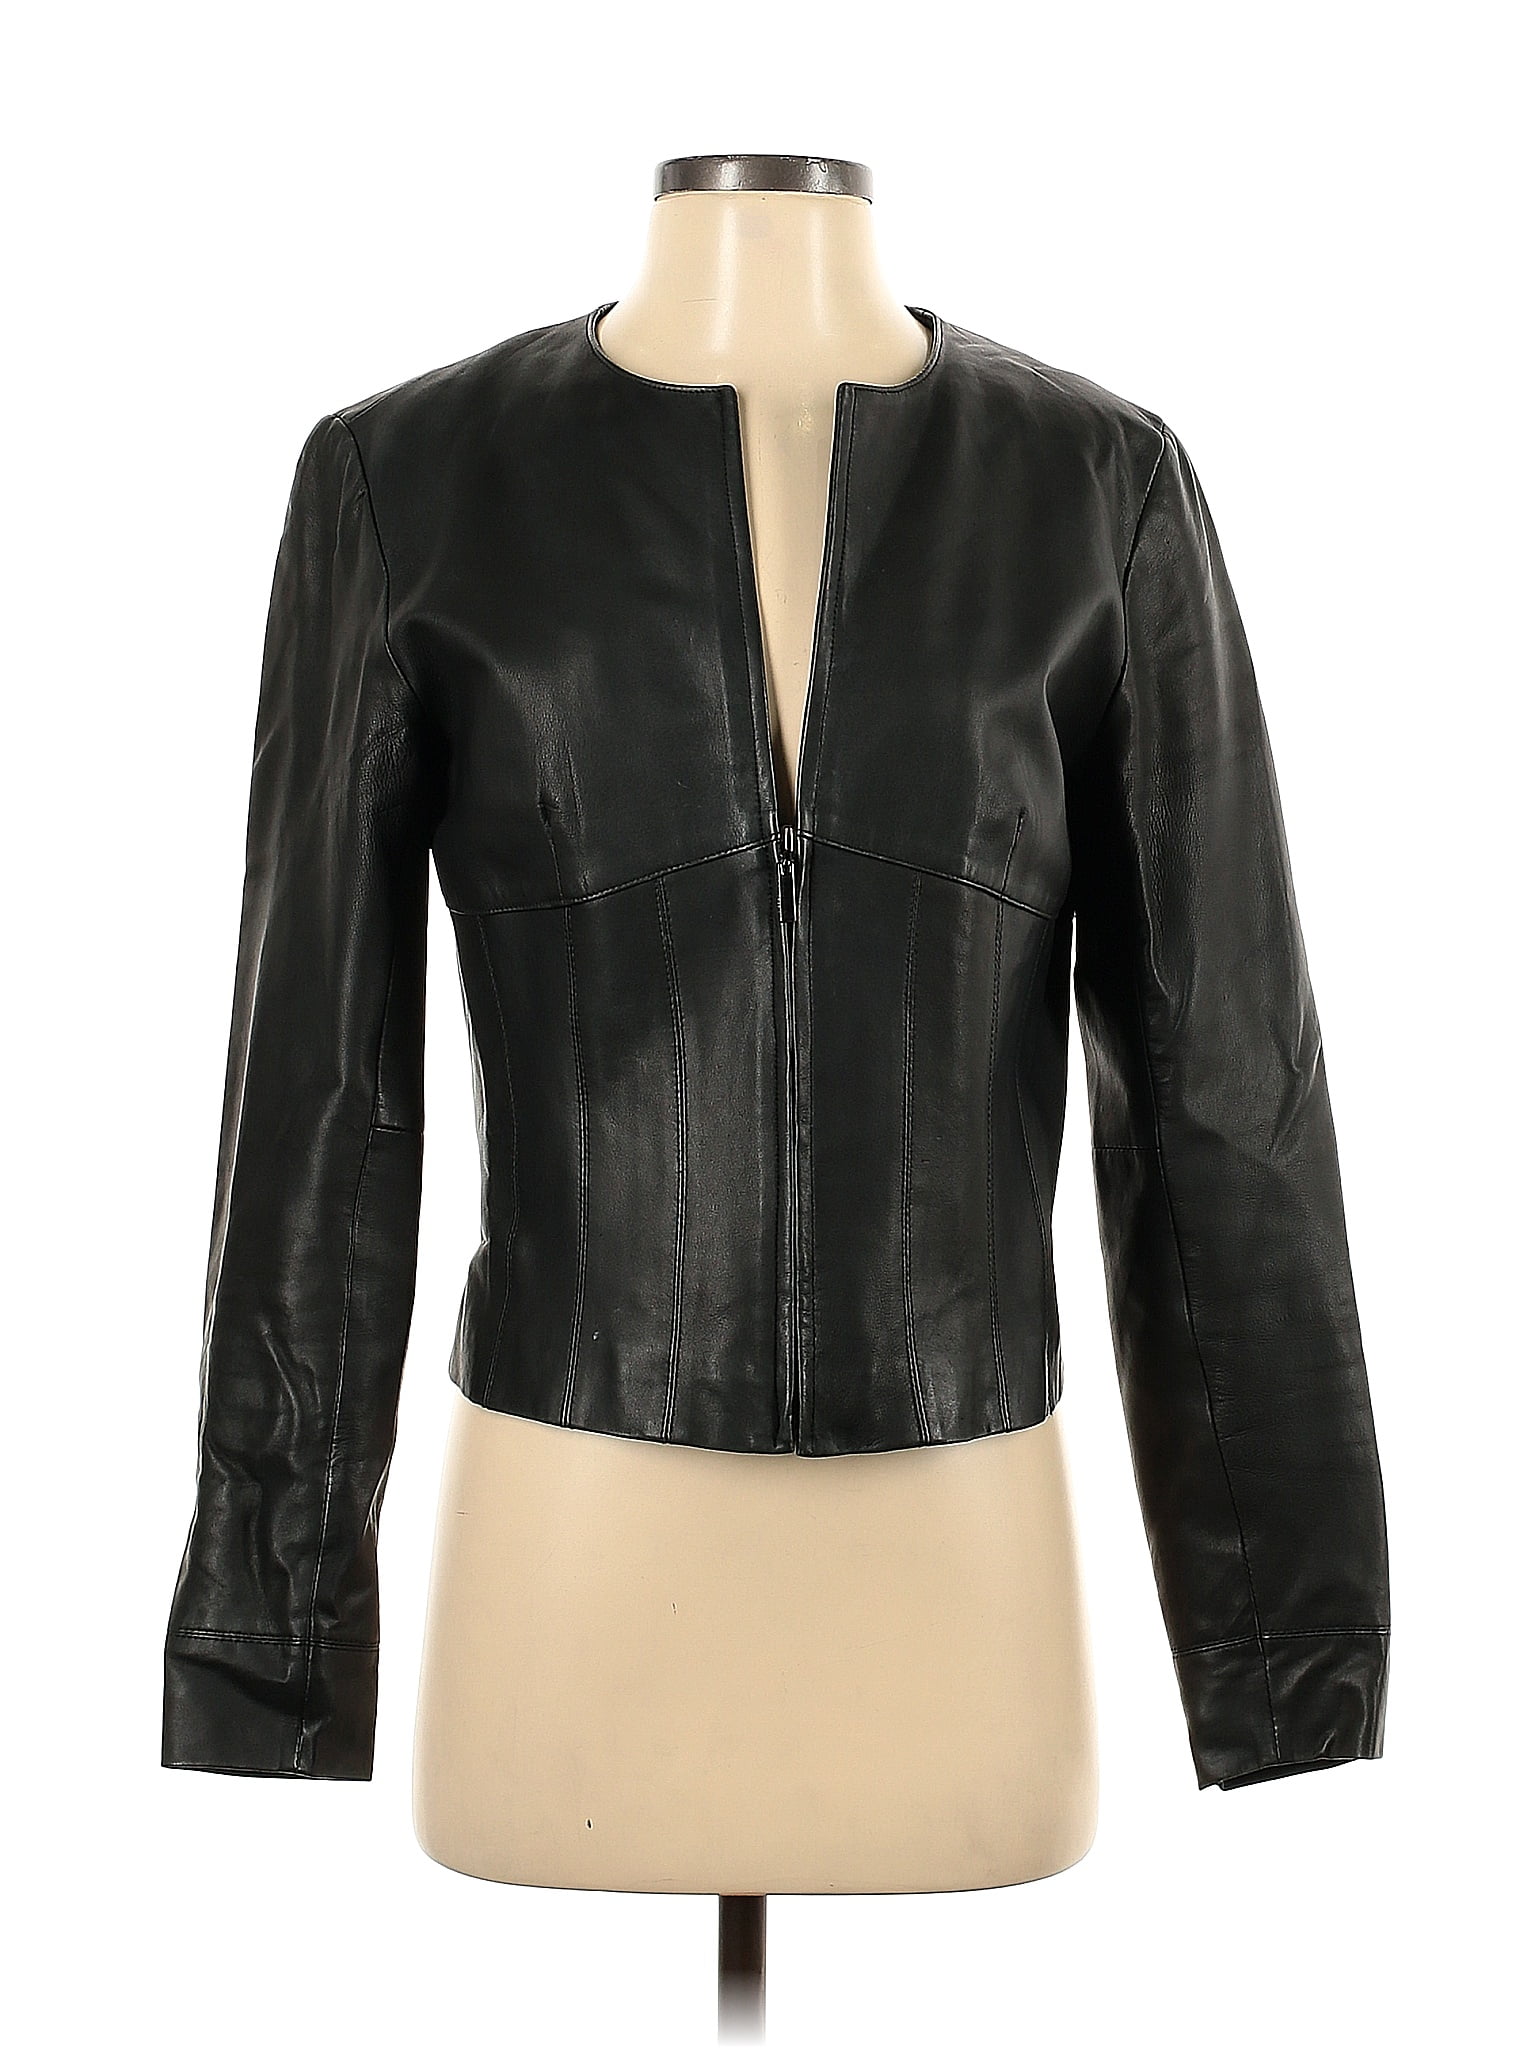 Siena Studio 100% Leather Black Leather Jacket Size 4 - 78% off | thredUP